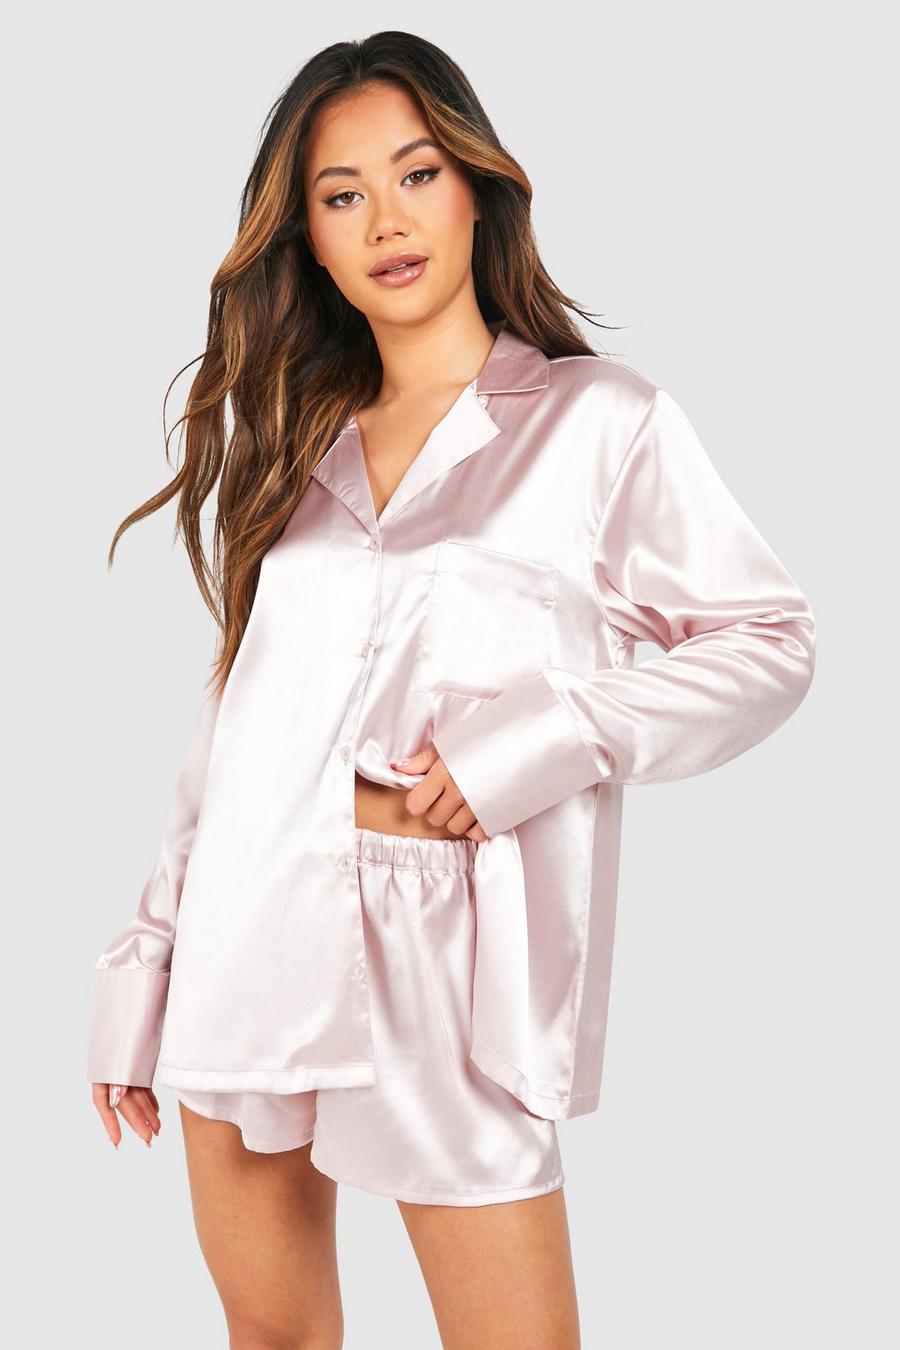 Sexy Pajama Set, Black Home Wear for Women, Light Women Pajama